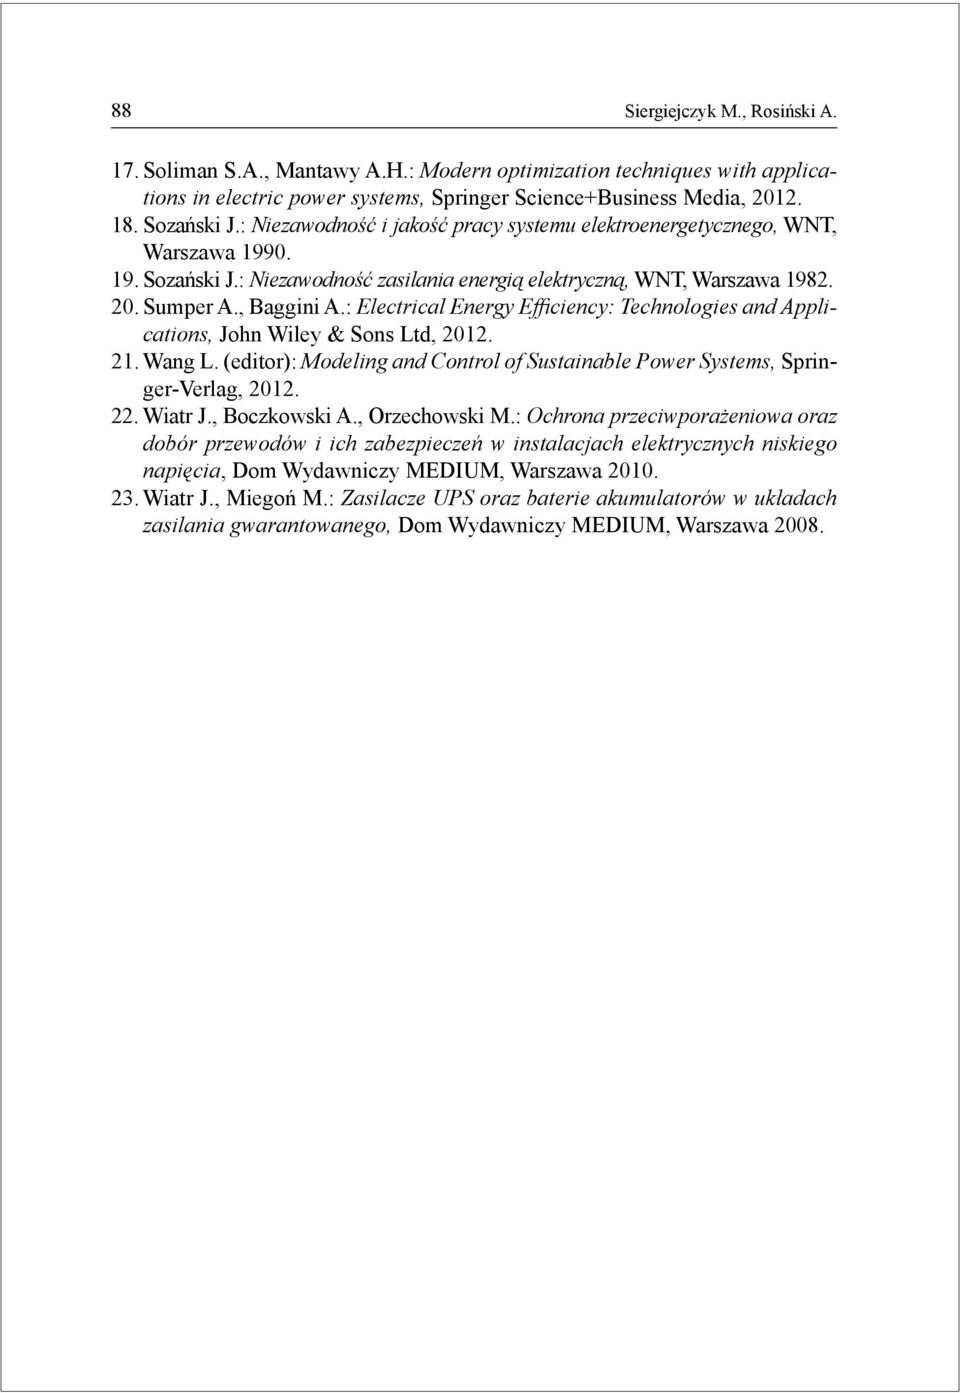 Technologies and Applications, John Wiley & Sons Ltd, 212 21 Wang L (editor): Modeling and Control of Sustainable Power Systems, Springer-Verlag, 212 22 Wiatr J, Boczkowski A, Orzechowski M: Ochrona